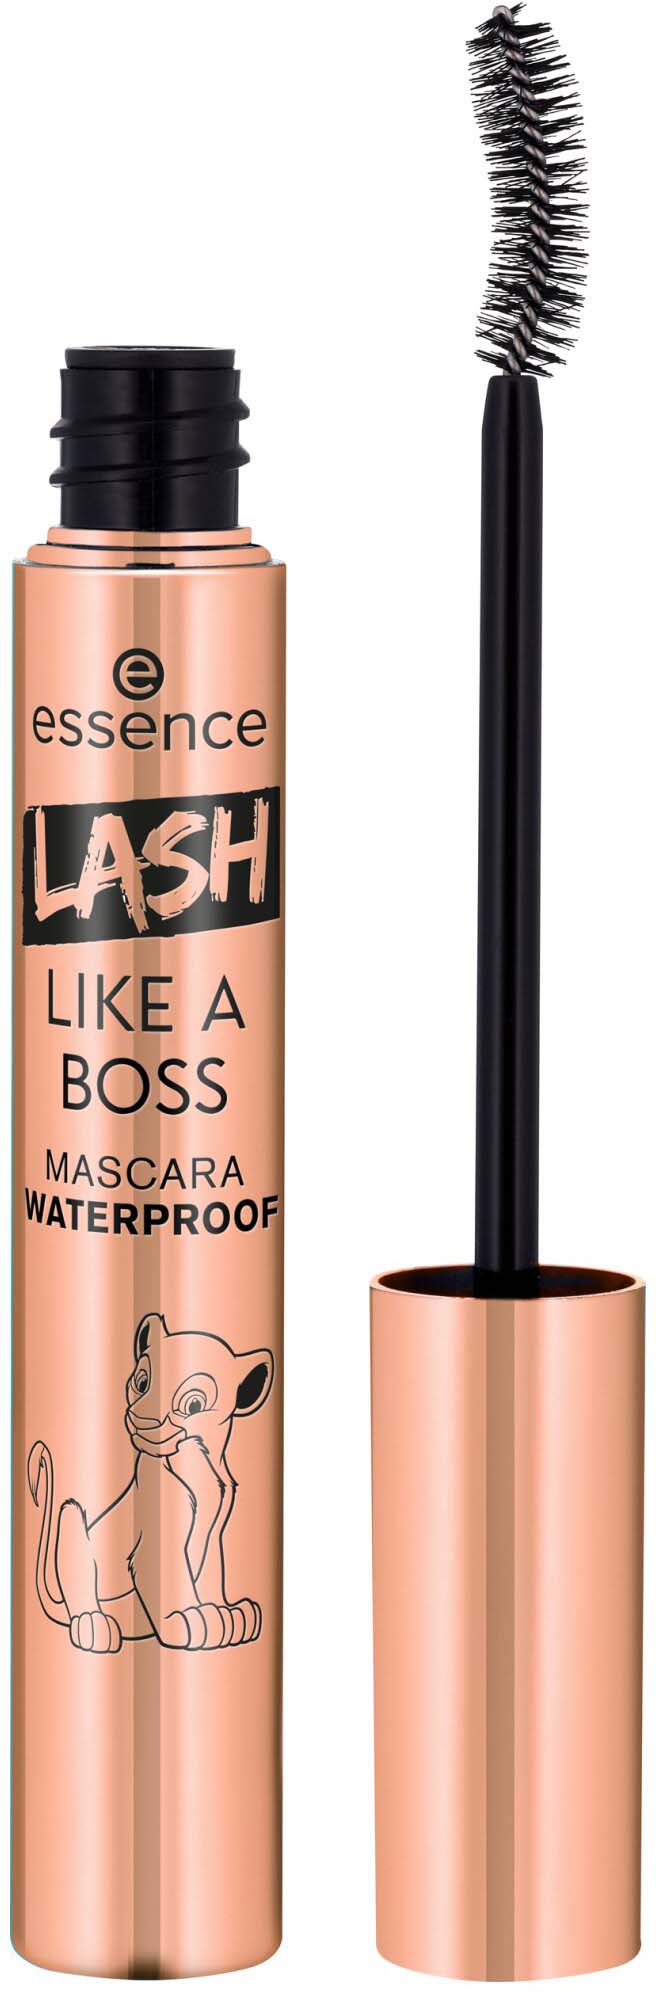 essence Lash Like A Boss Instant Volume & Length Mascara